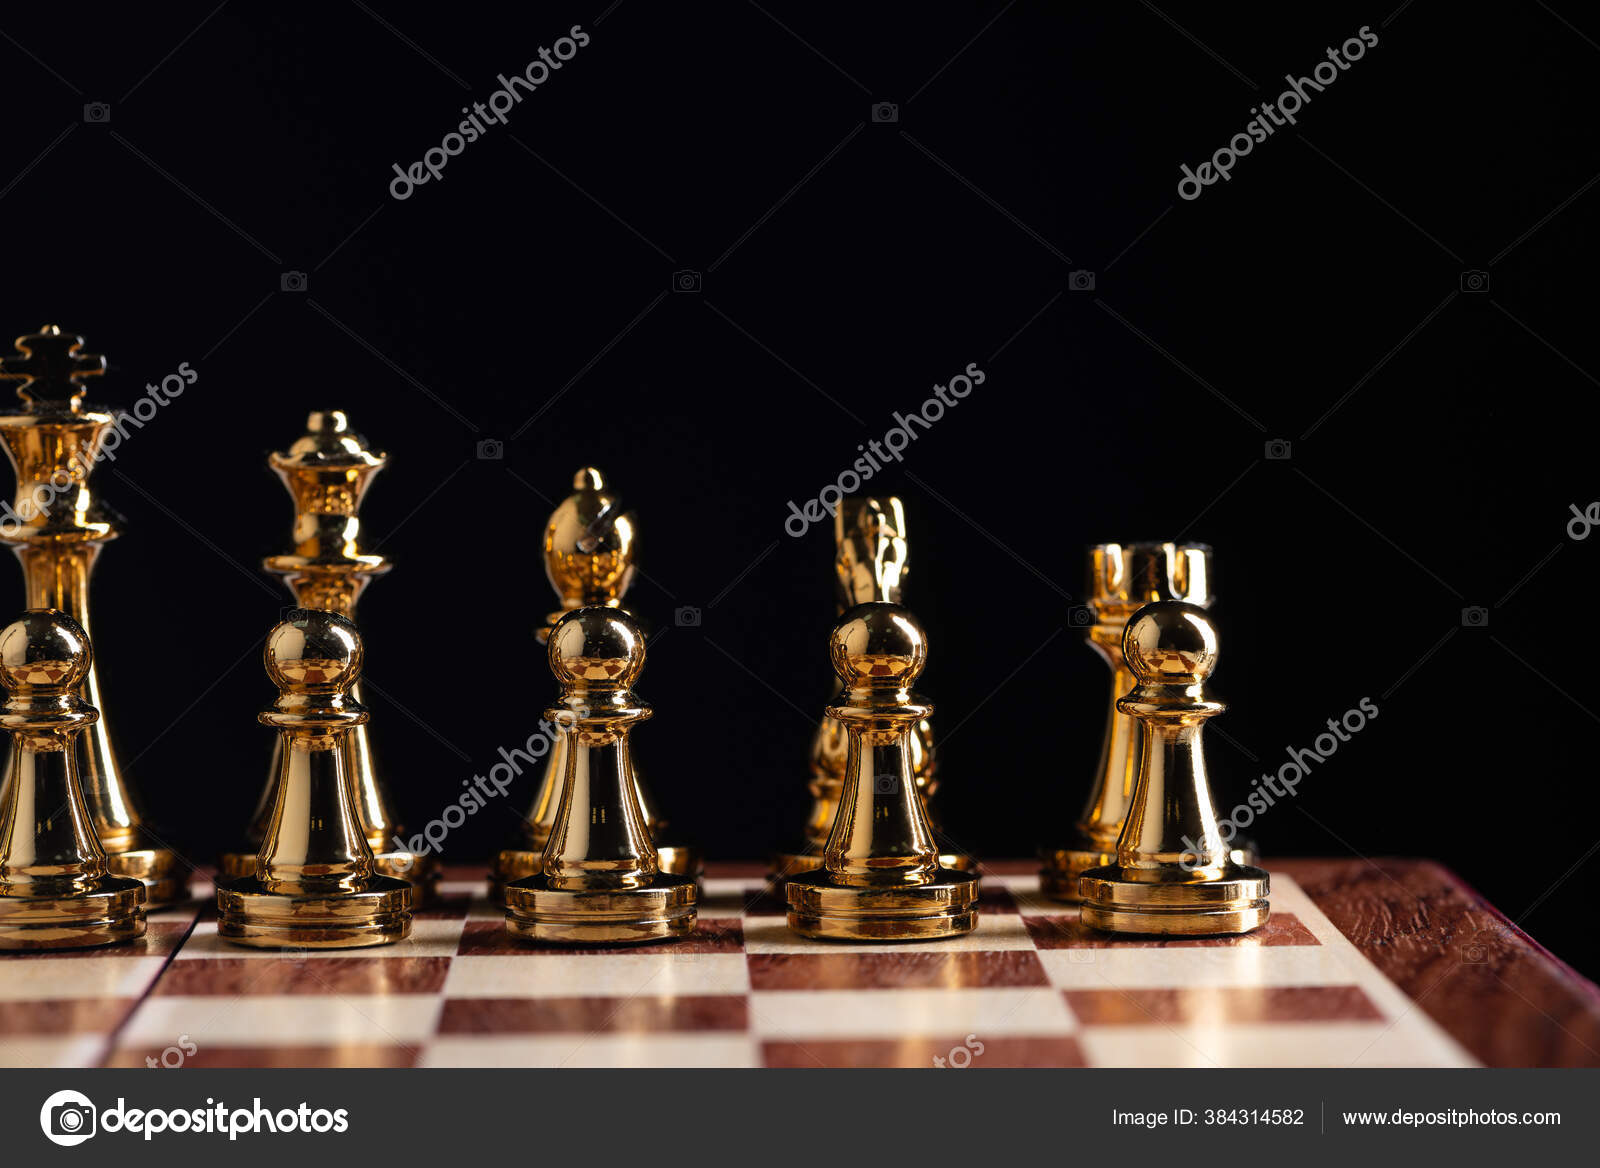 Jogo de tabuleiro de xadrez para conceitos de liderança